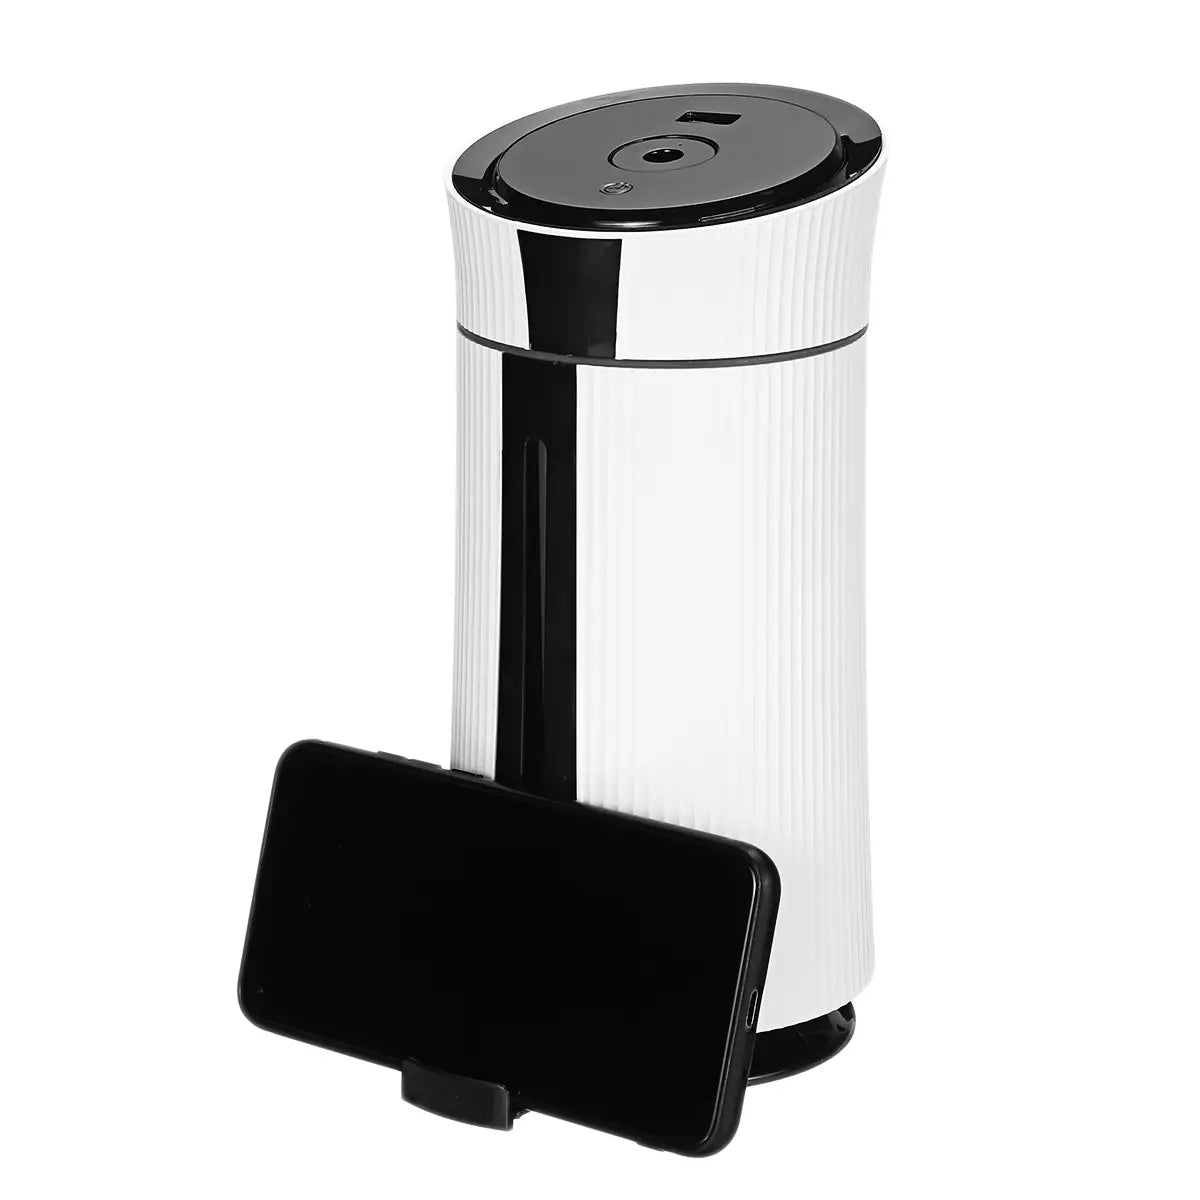 Portable Usb Humidifier 2 Gear Spray Mode Air Diffuser